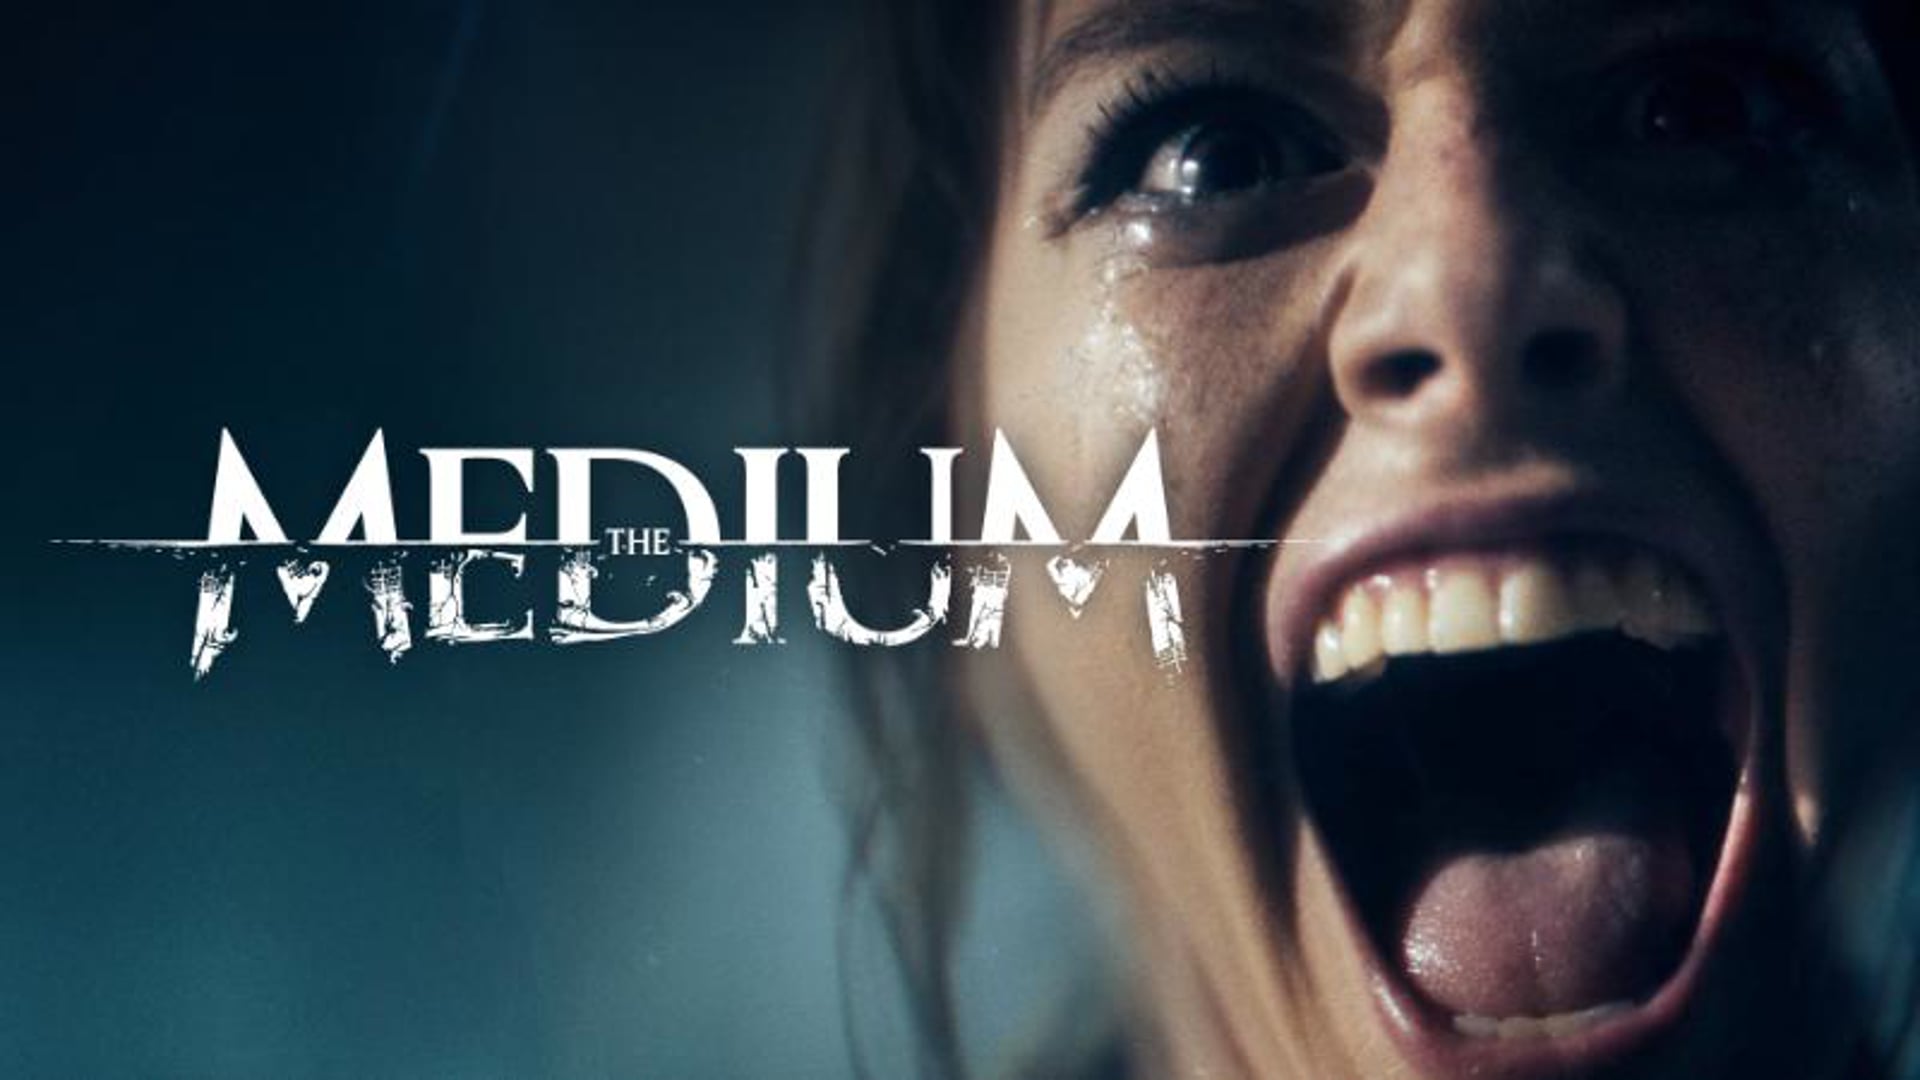 THE MEDIUM | Live Action Trailer